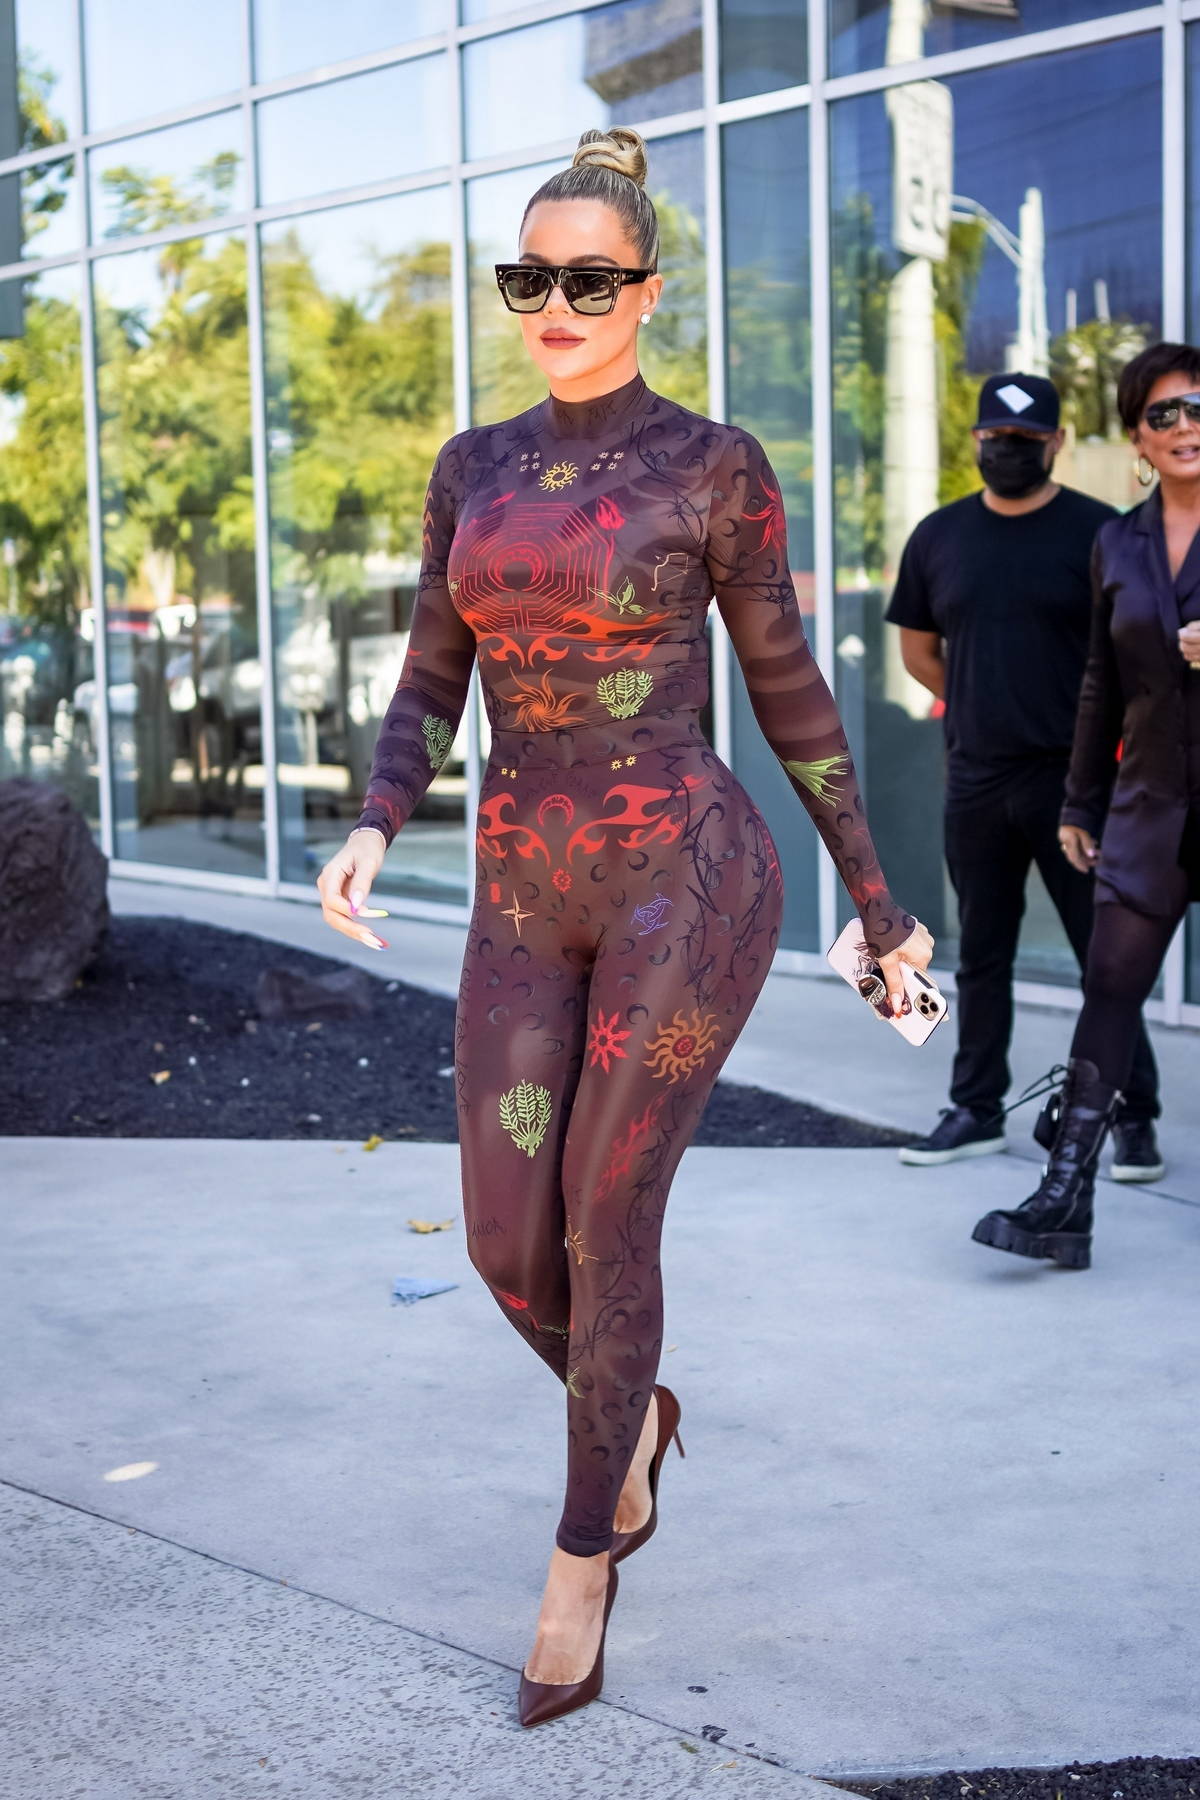 khloe kardashian flaunts her curves in fendi x skims bodysuit